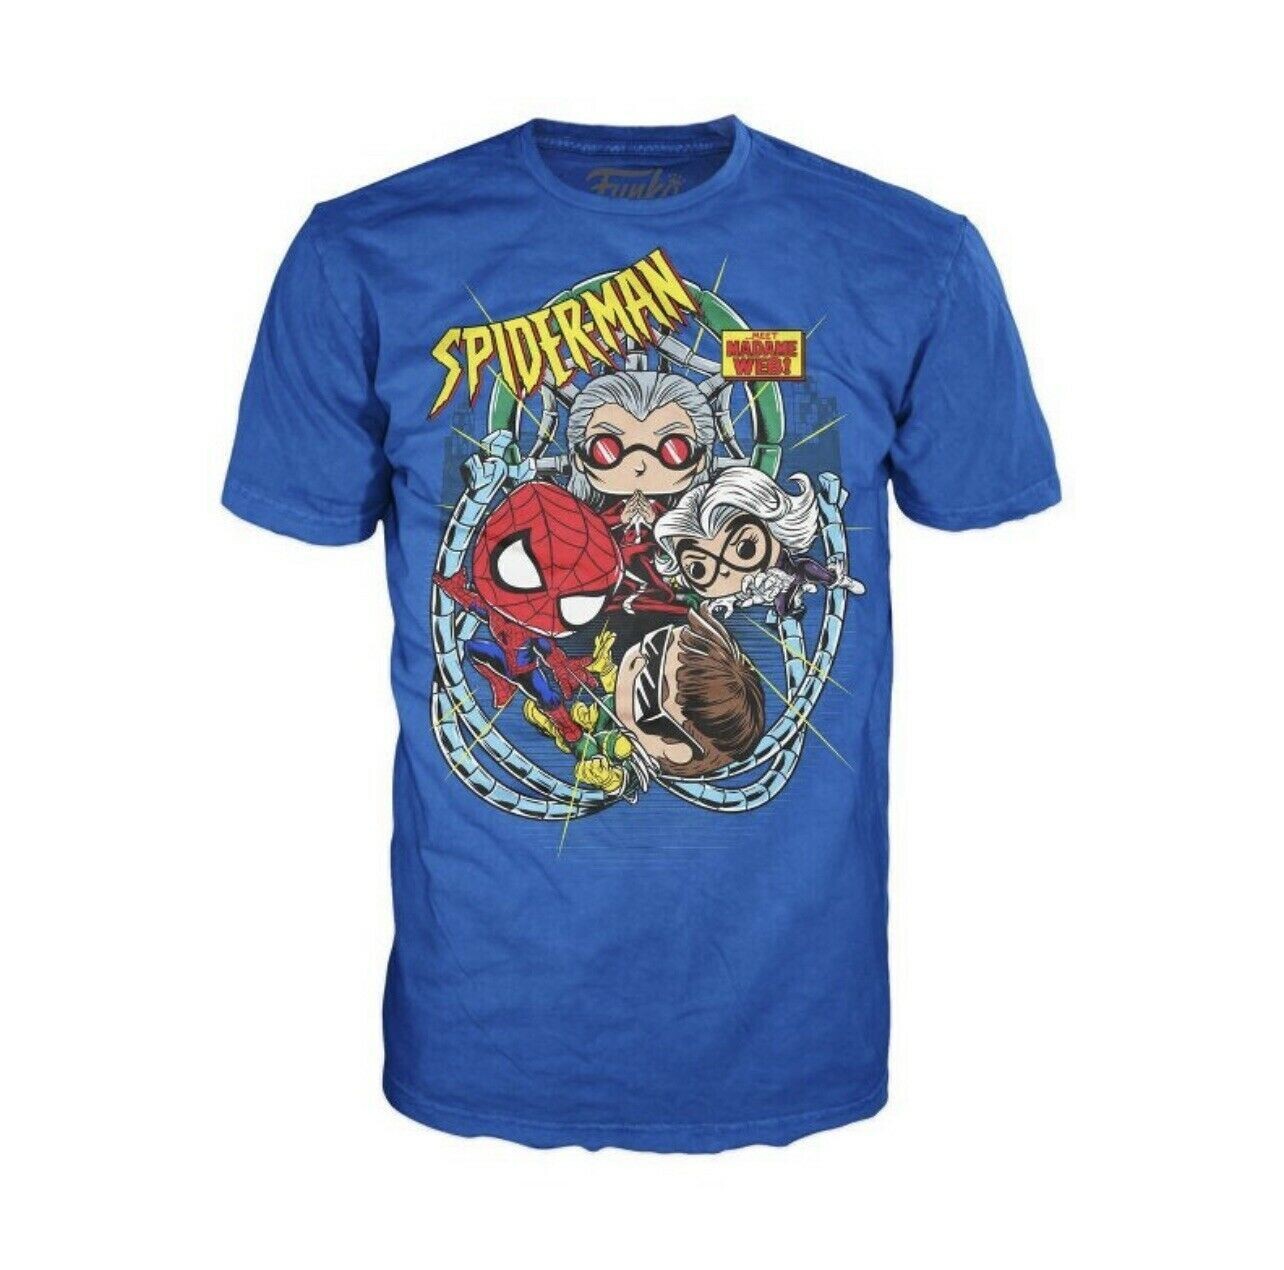 T-Shirt Spiderman Animated Series